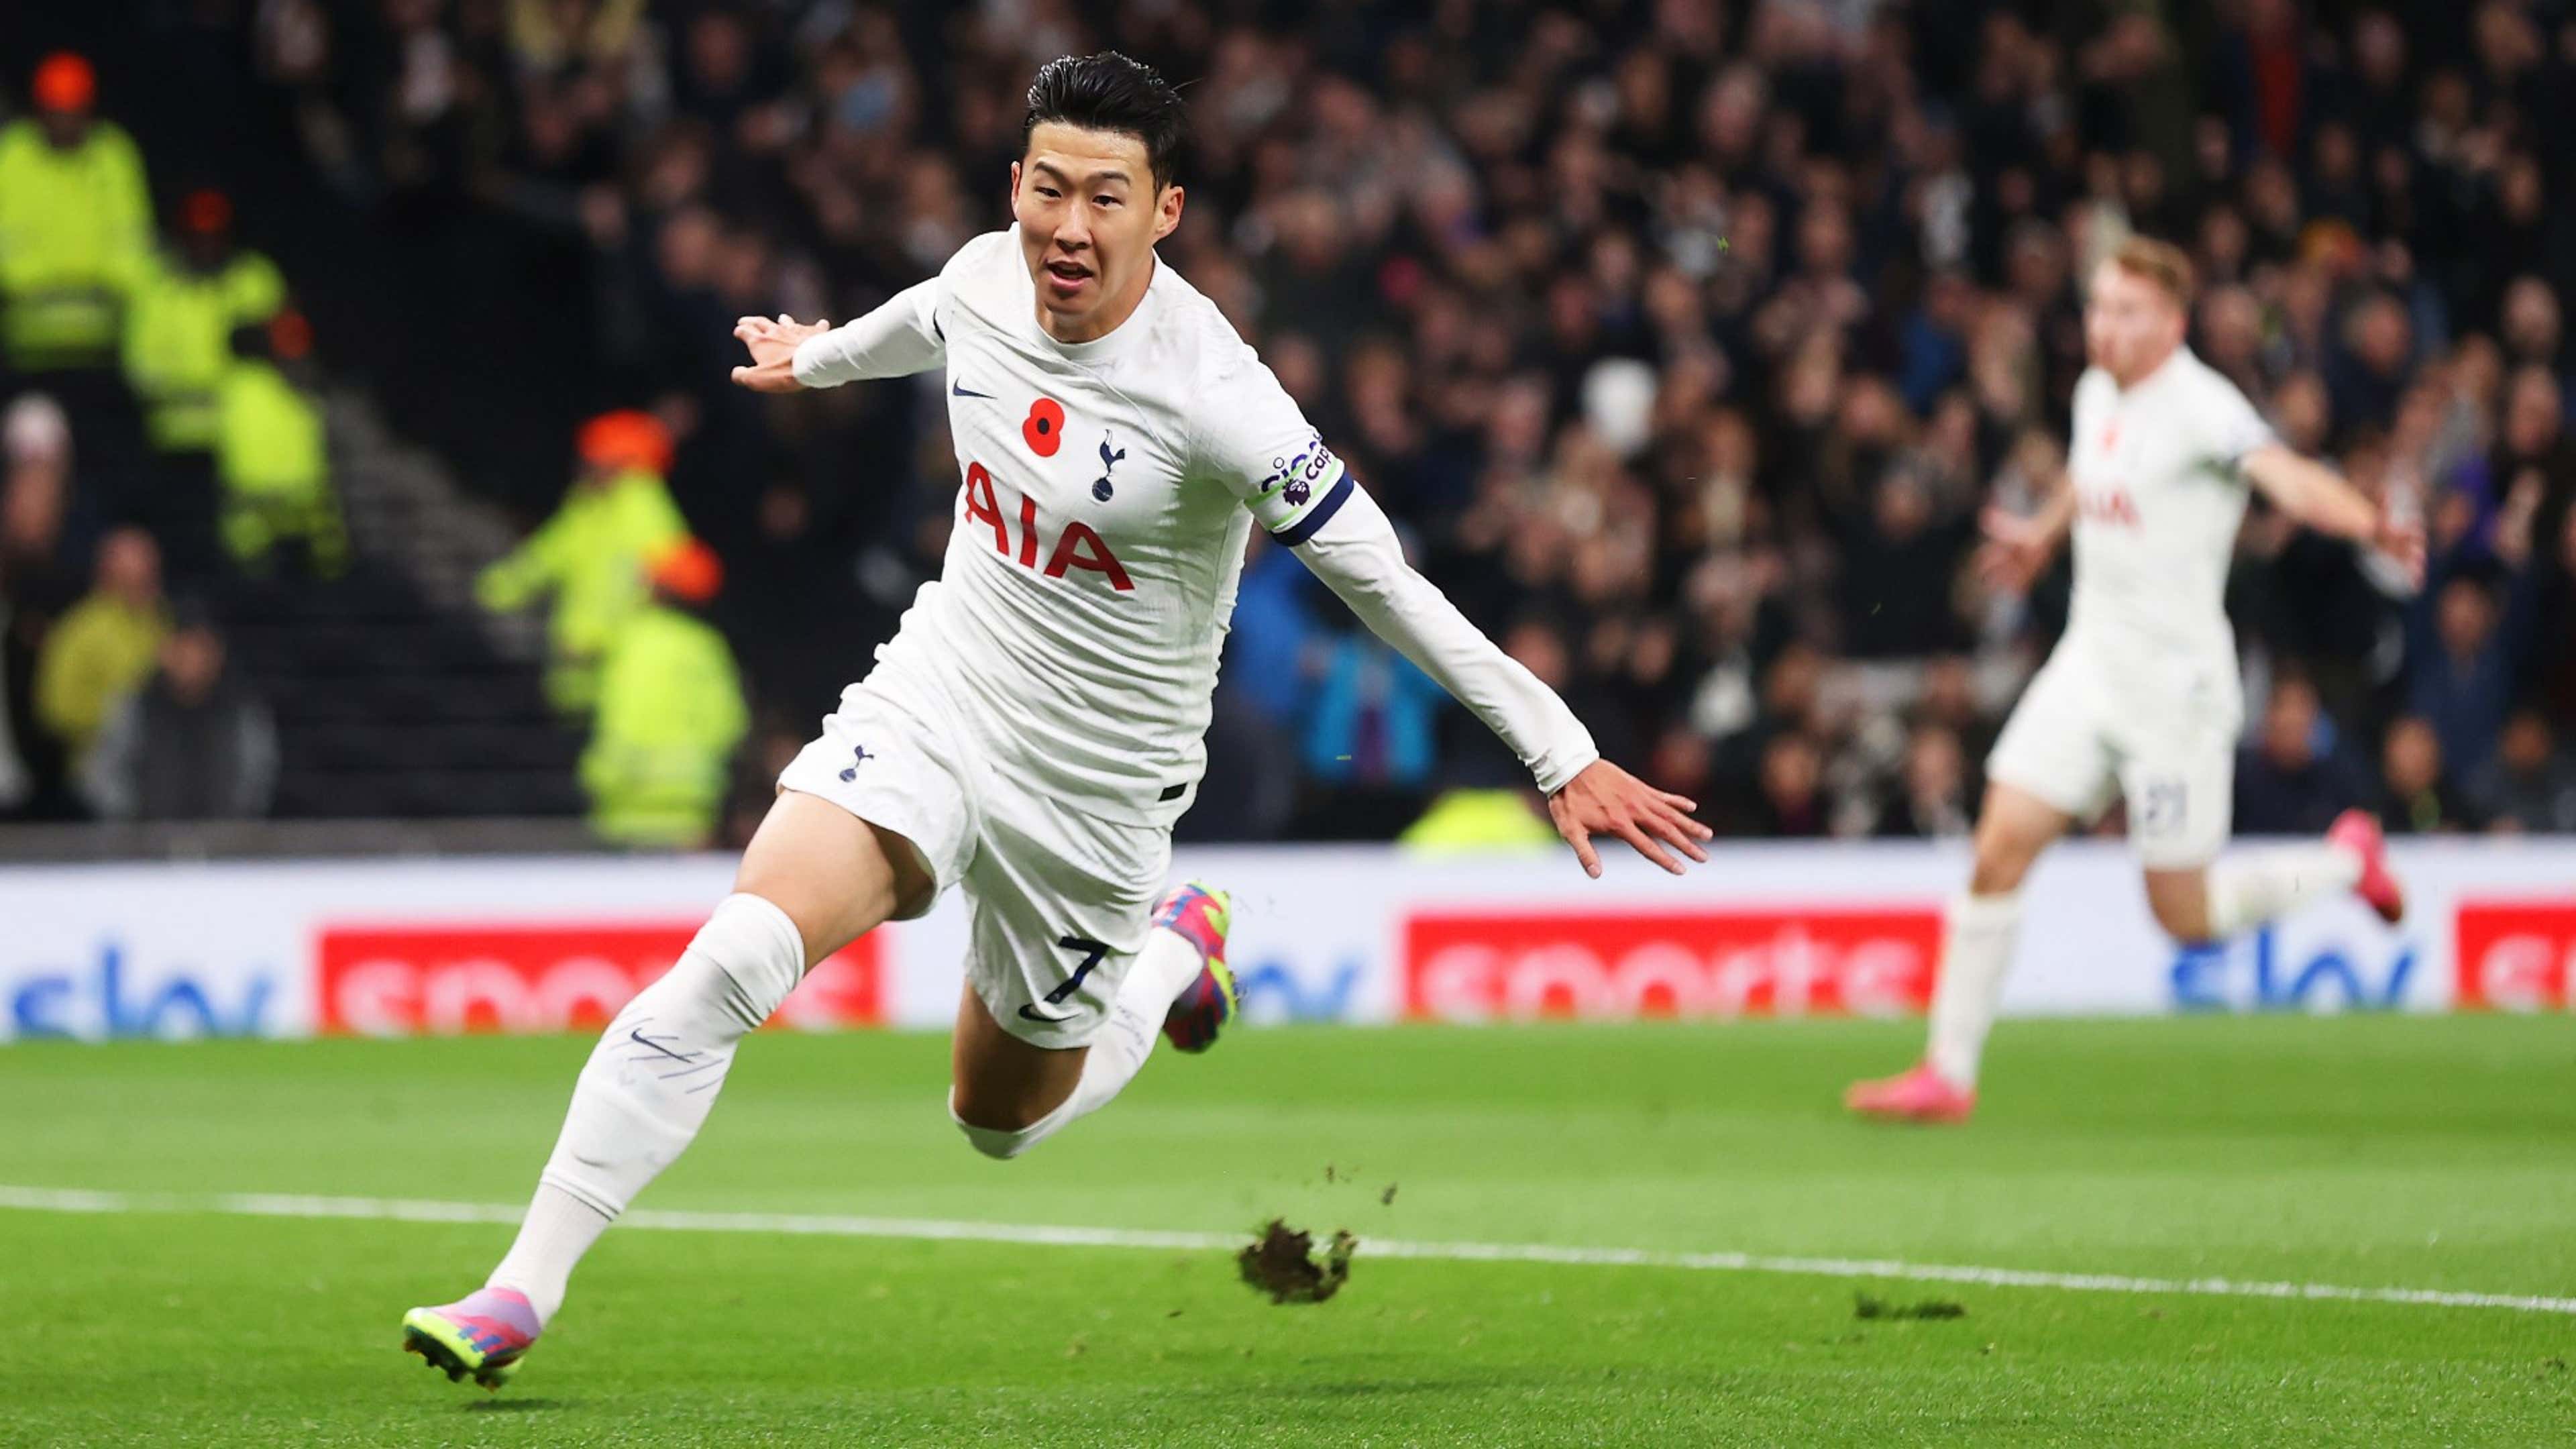 Tottenham vs West Ham: Postecoglou relying on Son playing